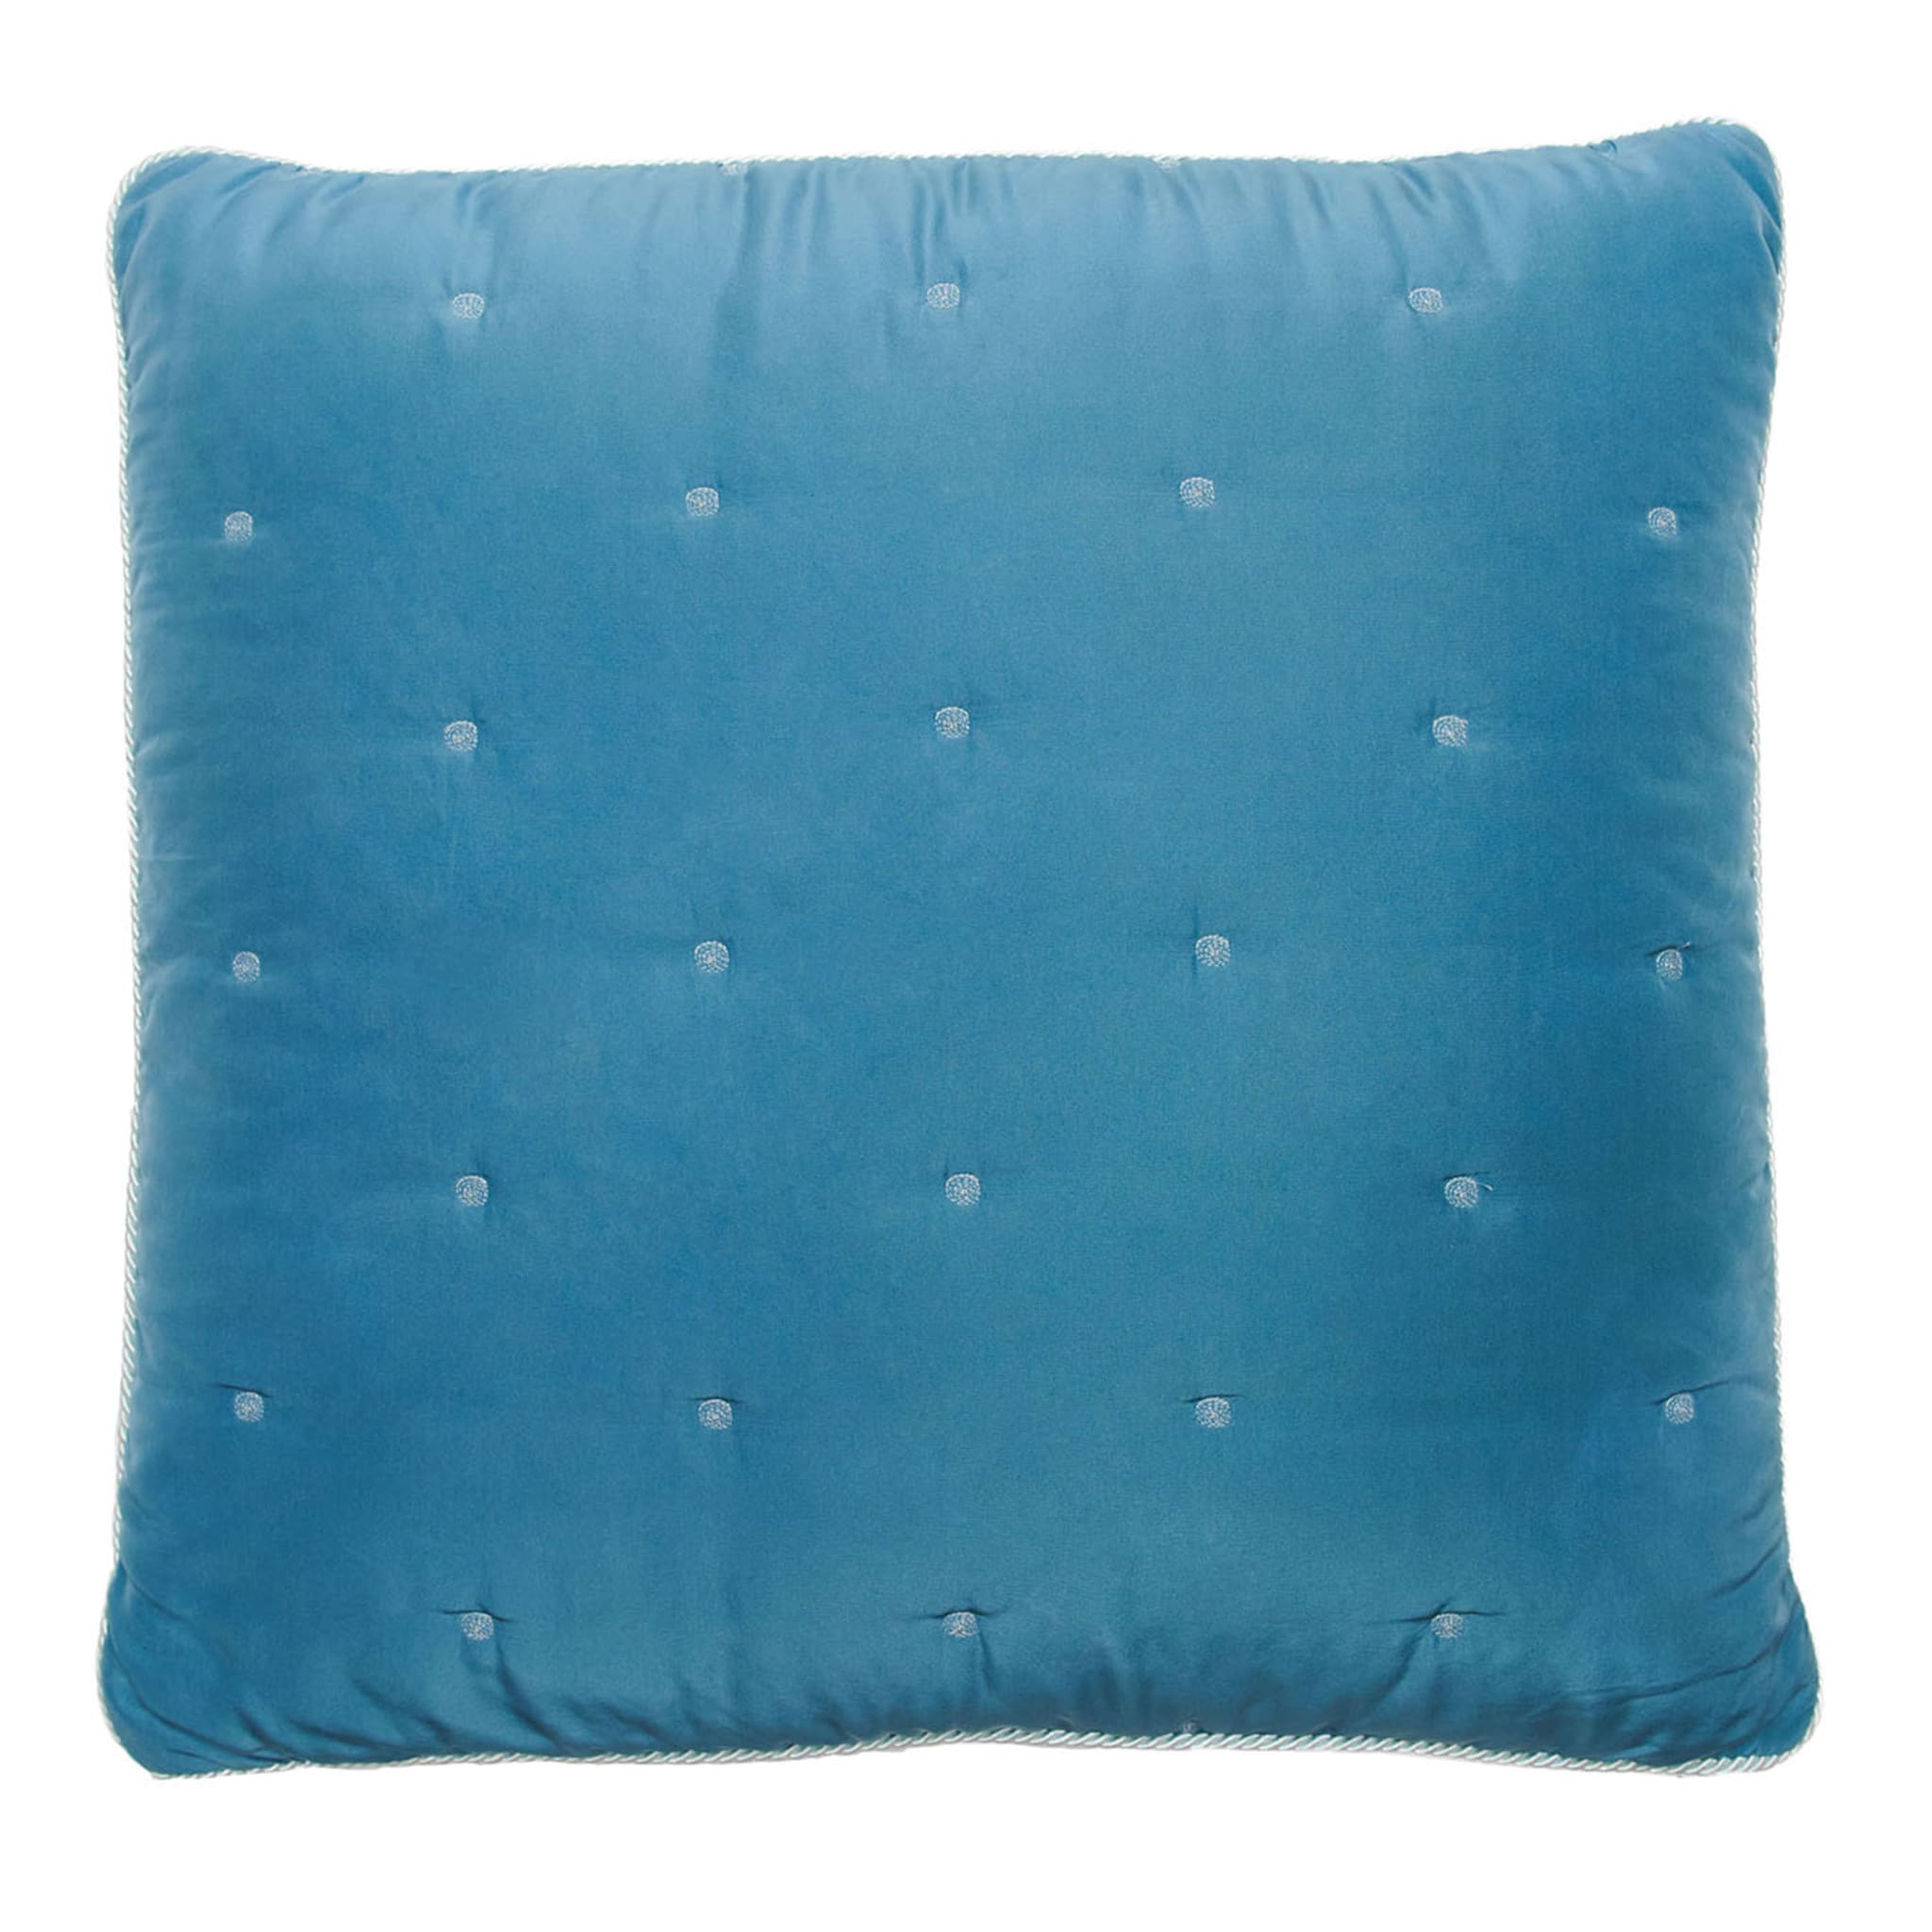 Pijama Party Light-Blue Decorative Cushion - Main view